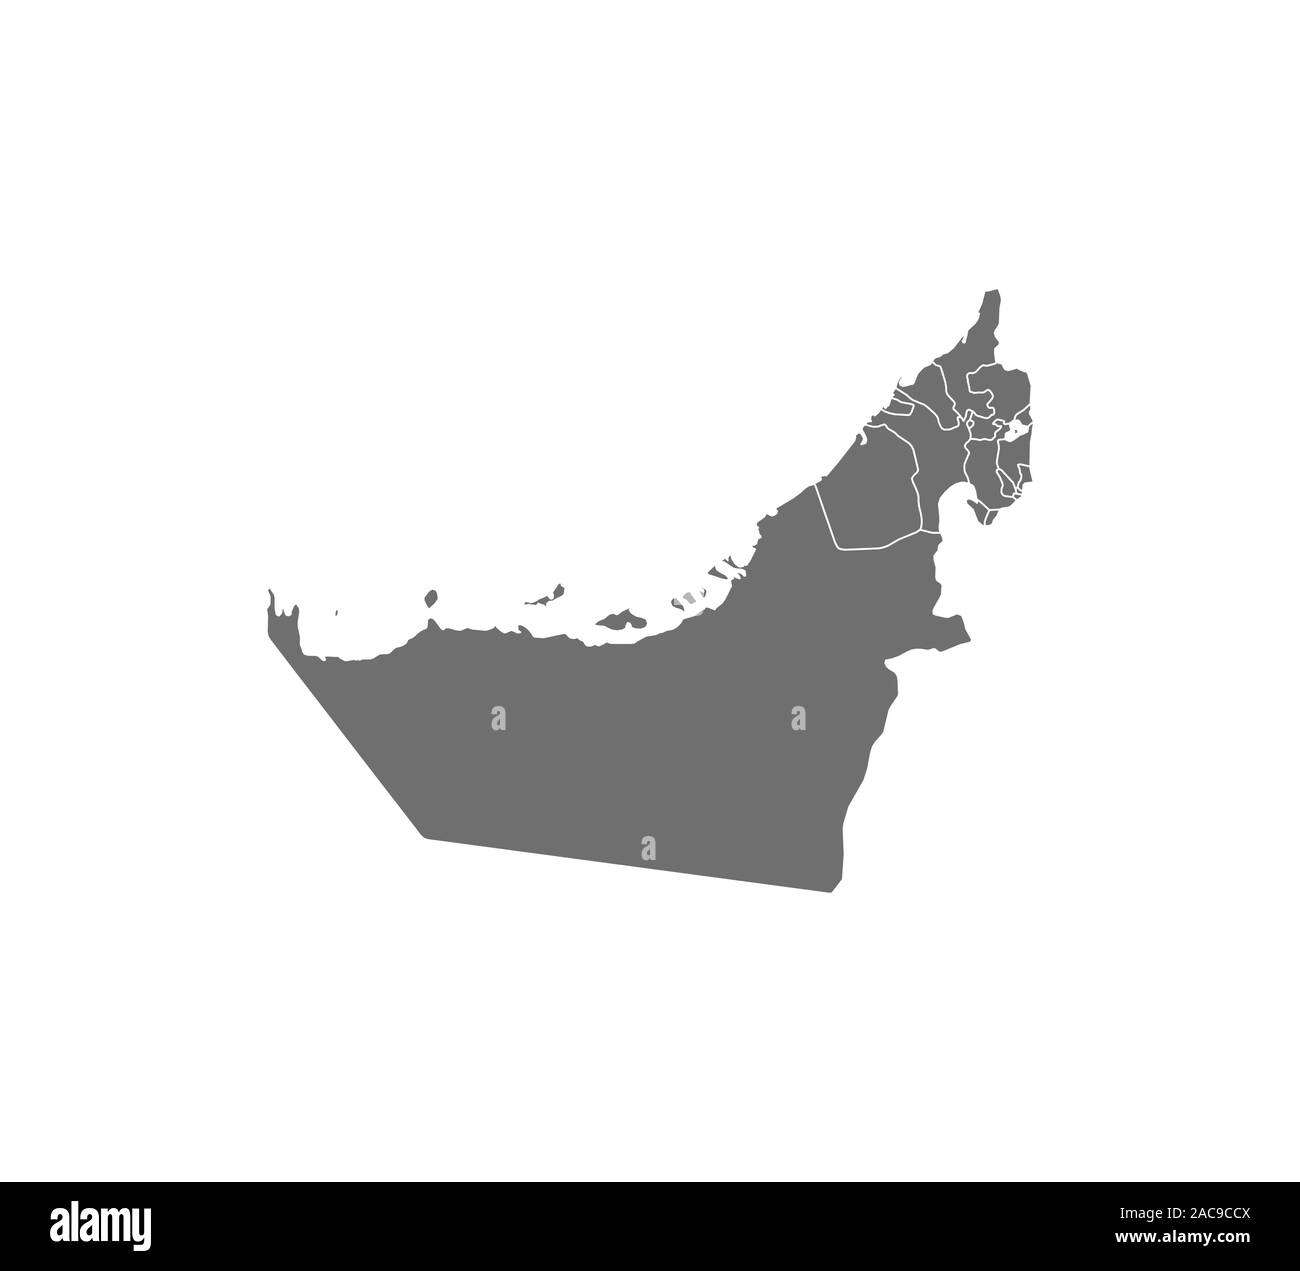 UAE Map, states border map. Vector illustration. Stock Vector